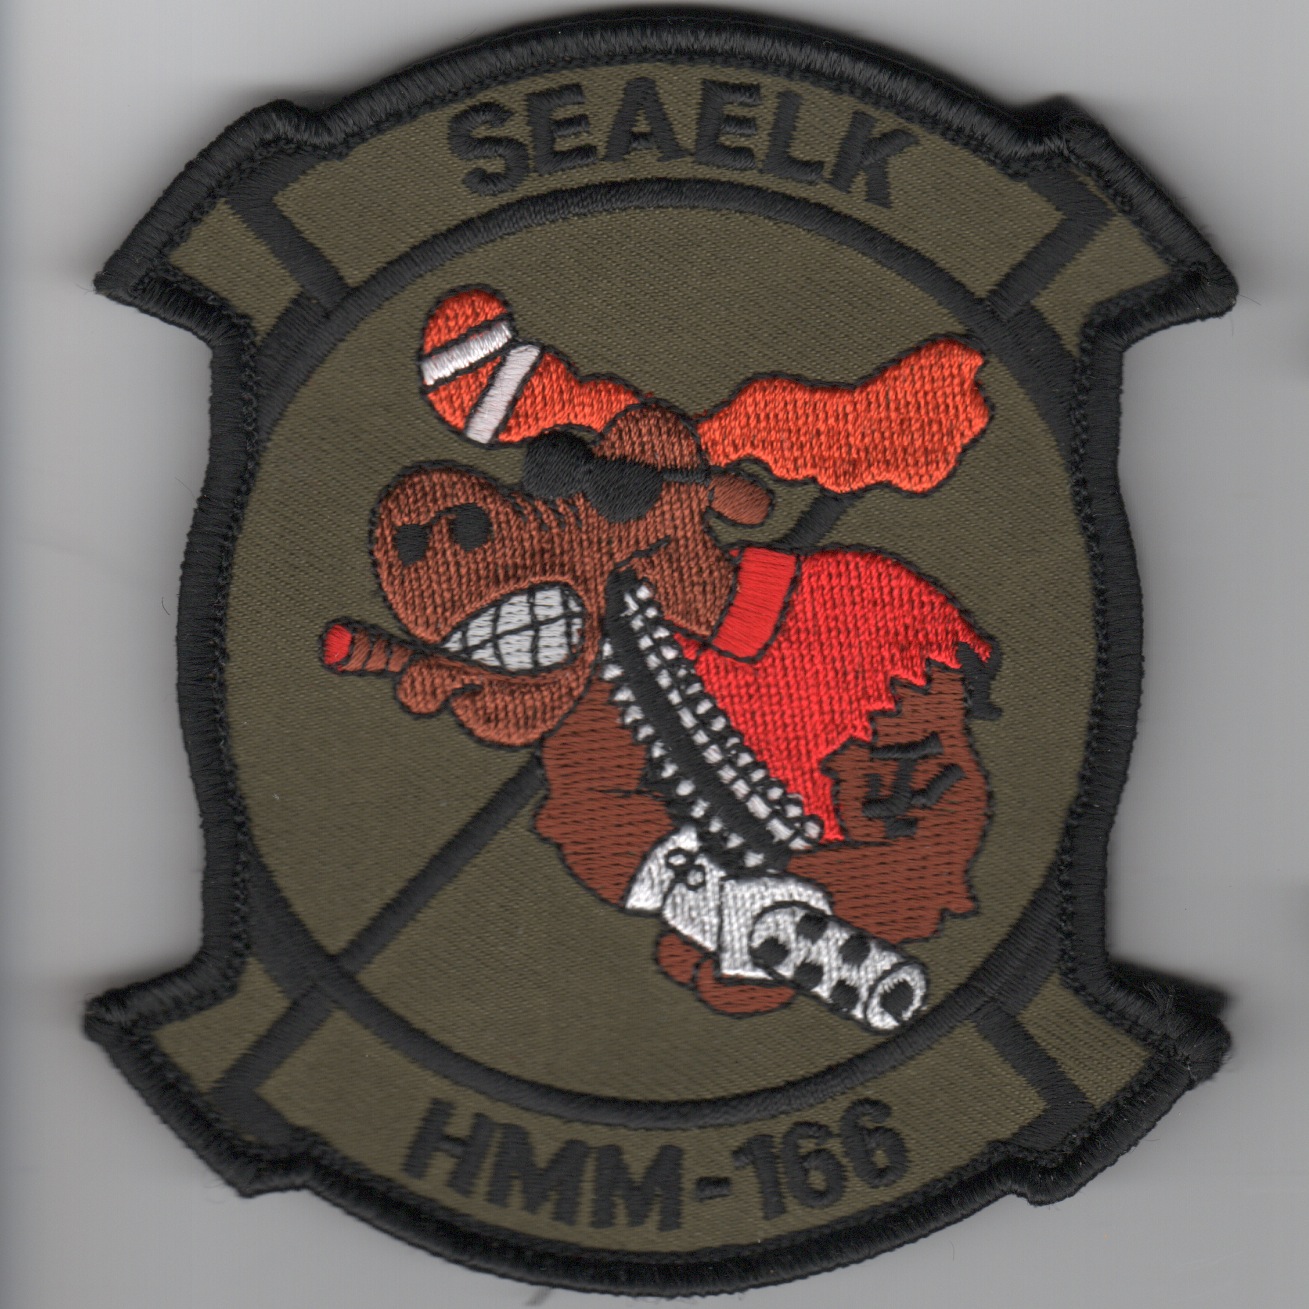 HMM-166 Squadron Patch (Subdued/Velcro)